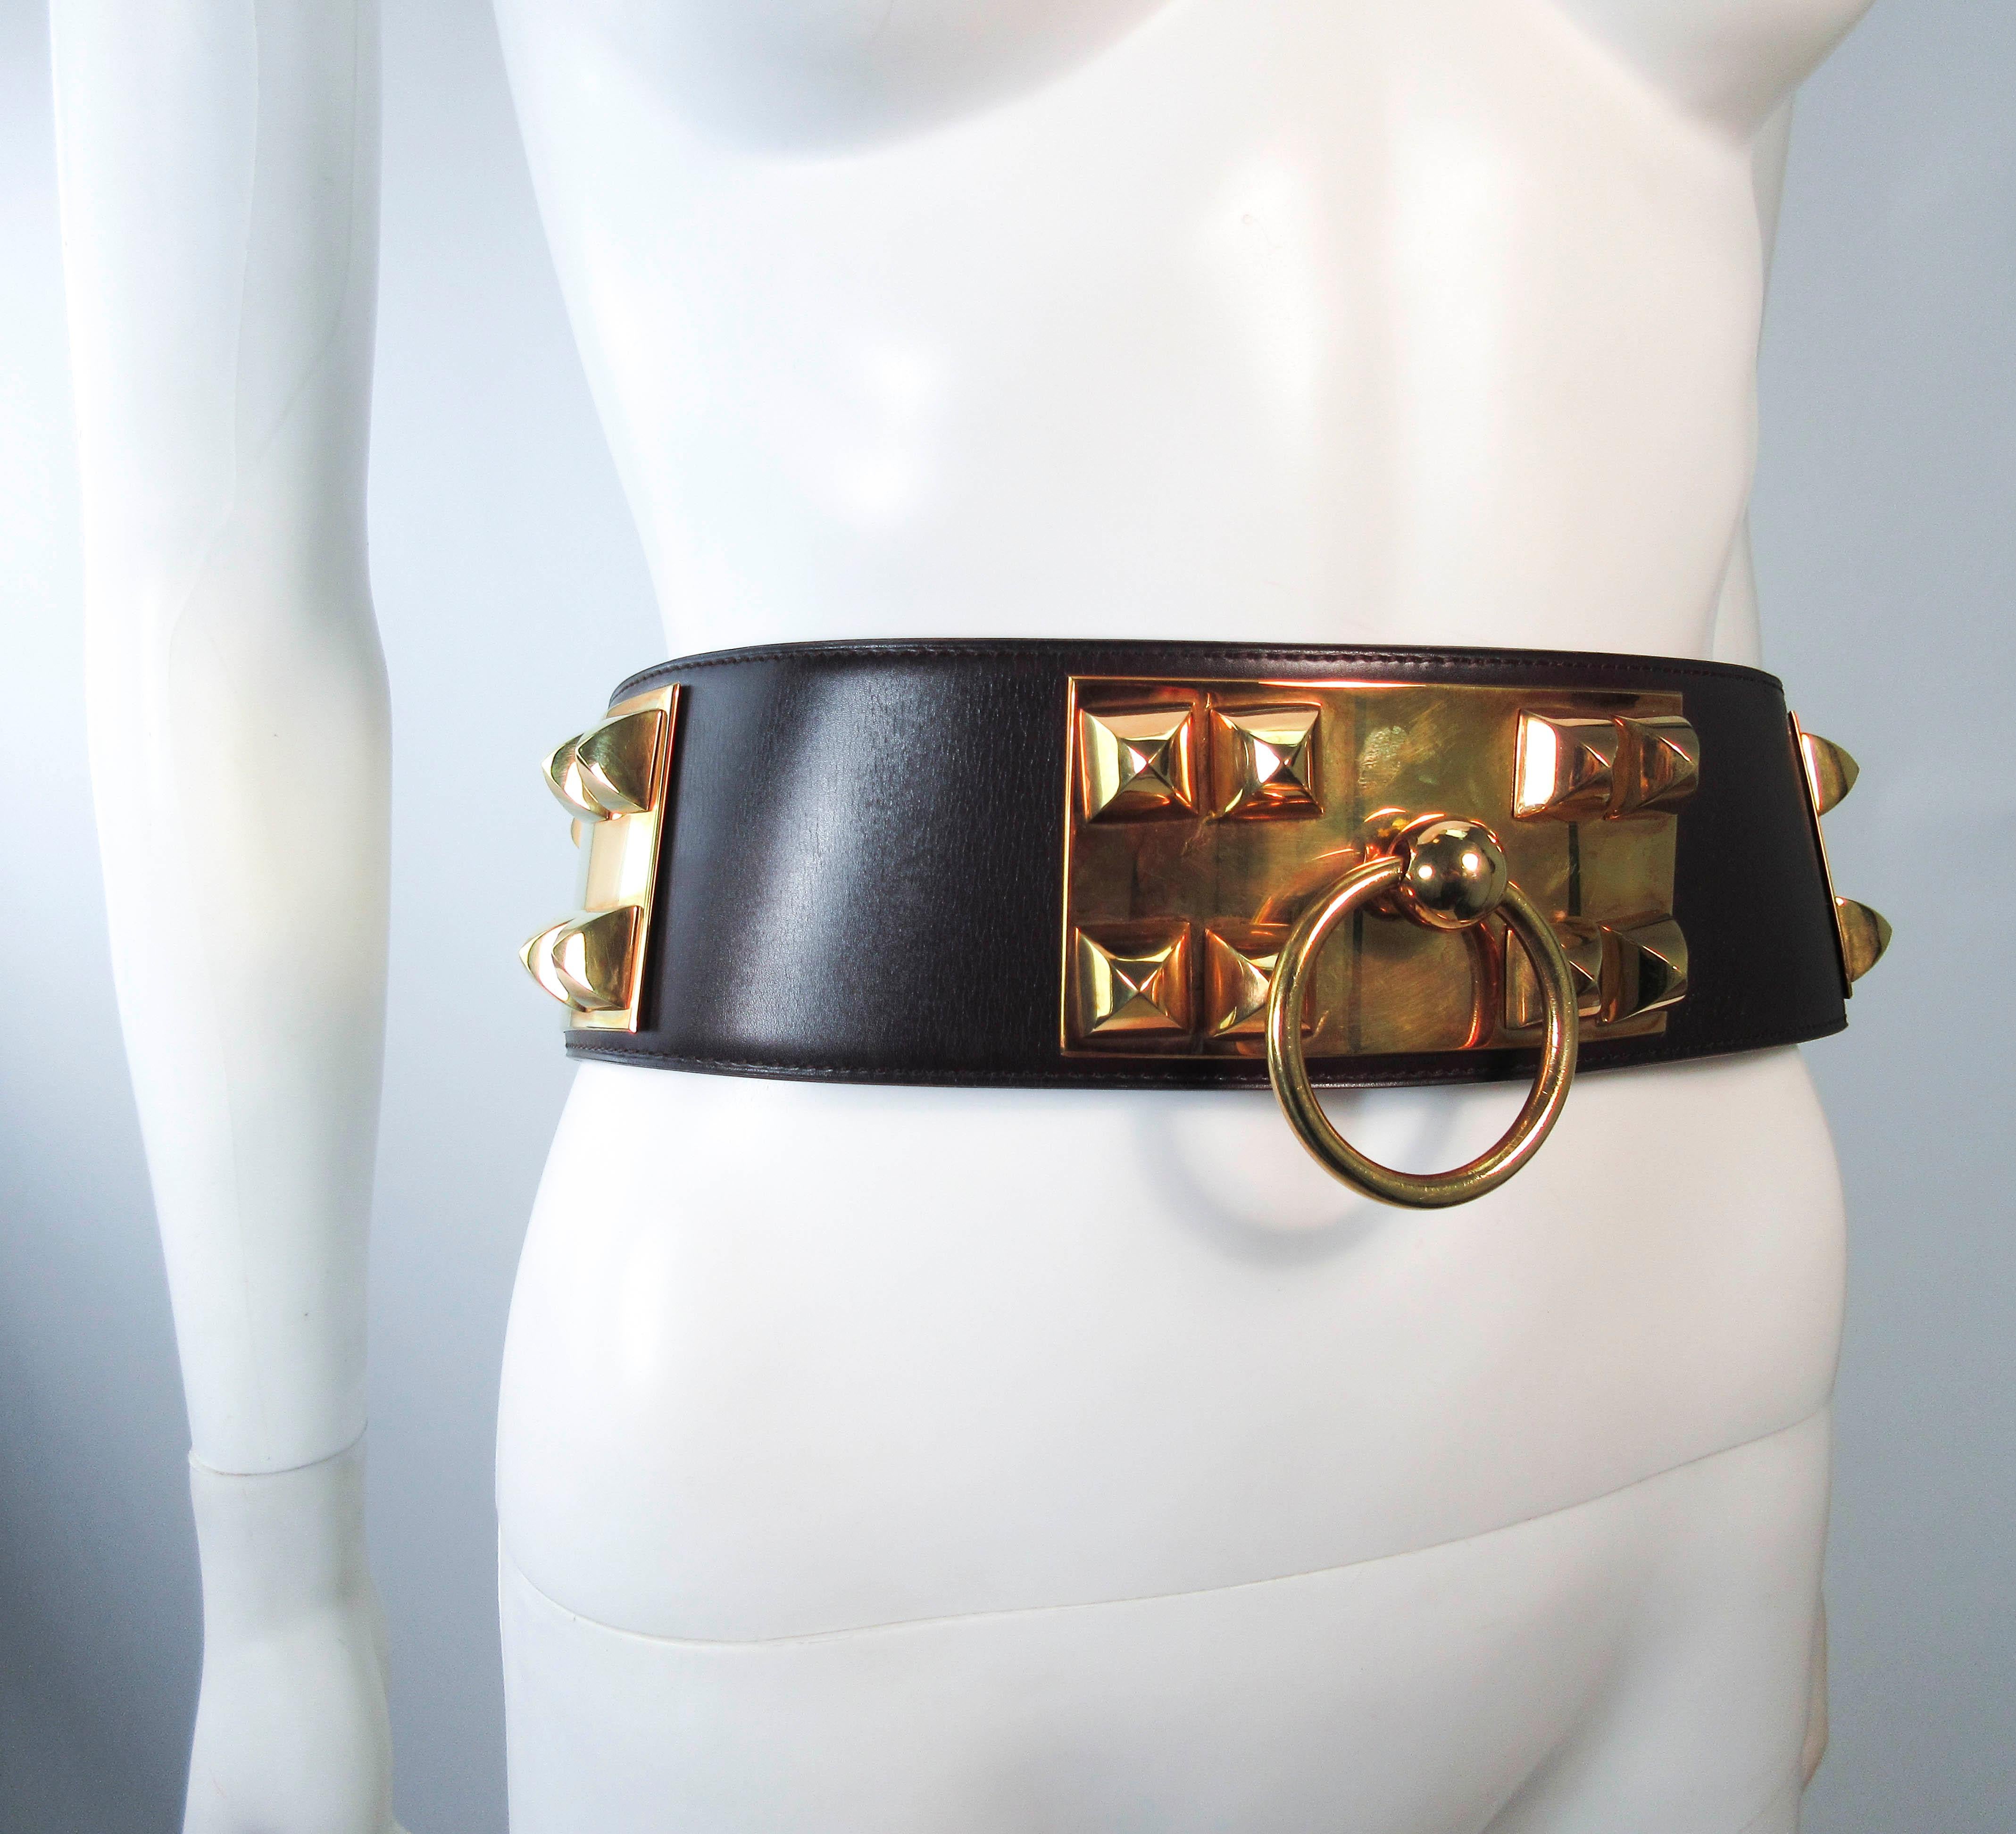 HERMES Collier De Chien Vintage Brown Leather Belt with Gold Hardware Size Large 2